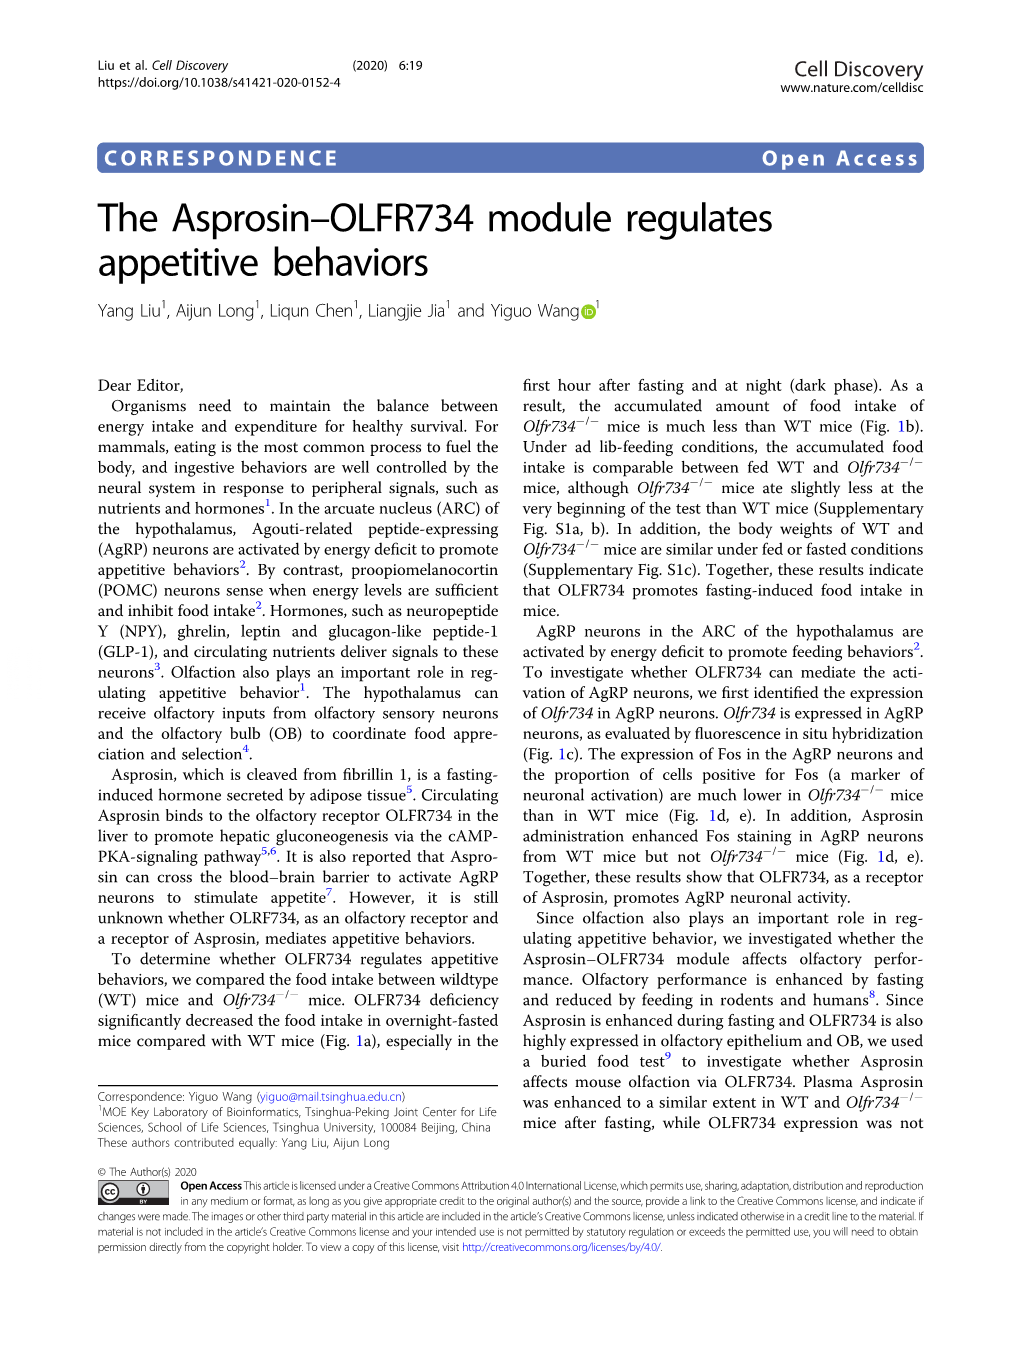 The Asprosin–OLFR734 Module Regulates Appetitive Behaviors Yang Liu1, Aijun Long1,Liqunchen1, Liangjie Jia1 and Yiguo Wang 1